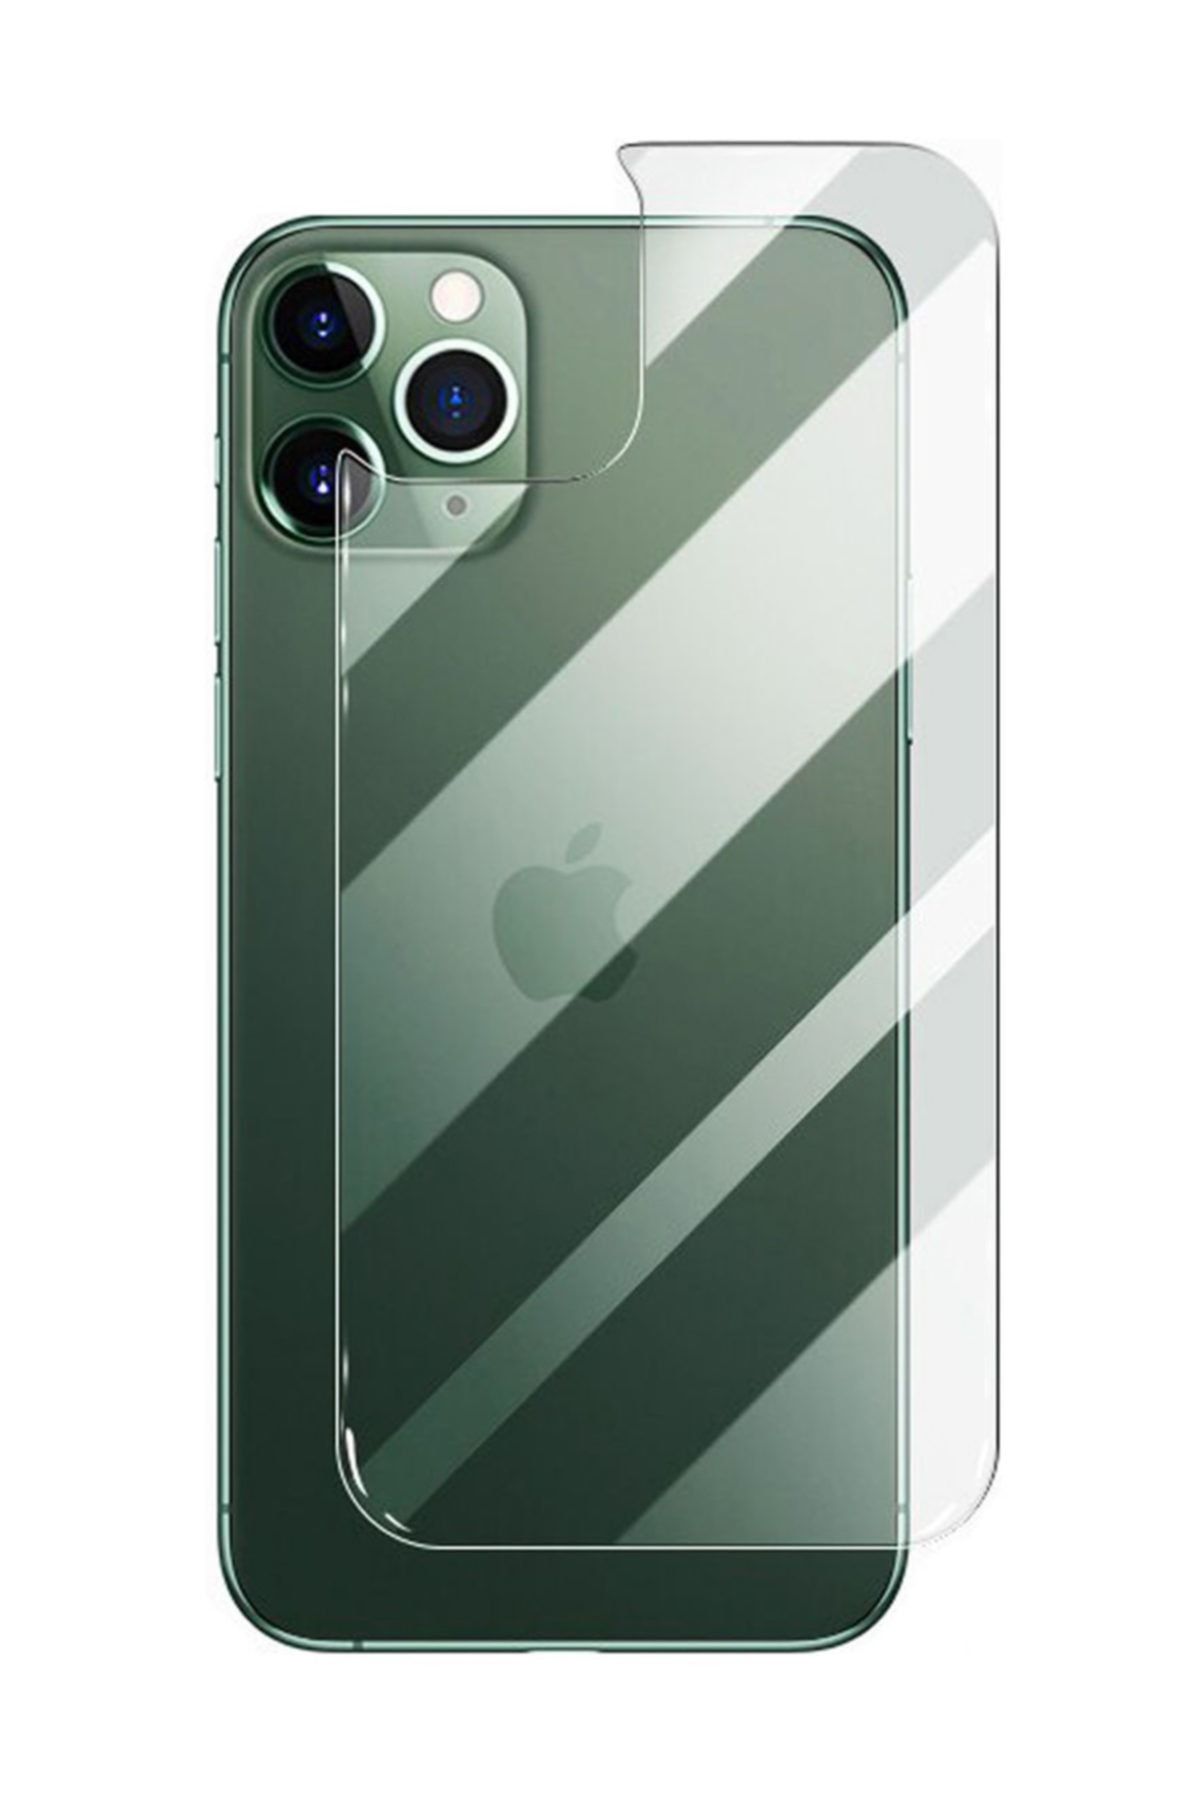 Microcase Iphone 11 Pro Max Arka Kapak Için Tempered Glass Cam Koruma